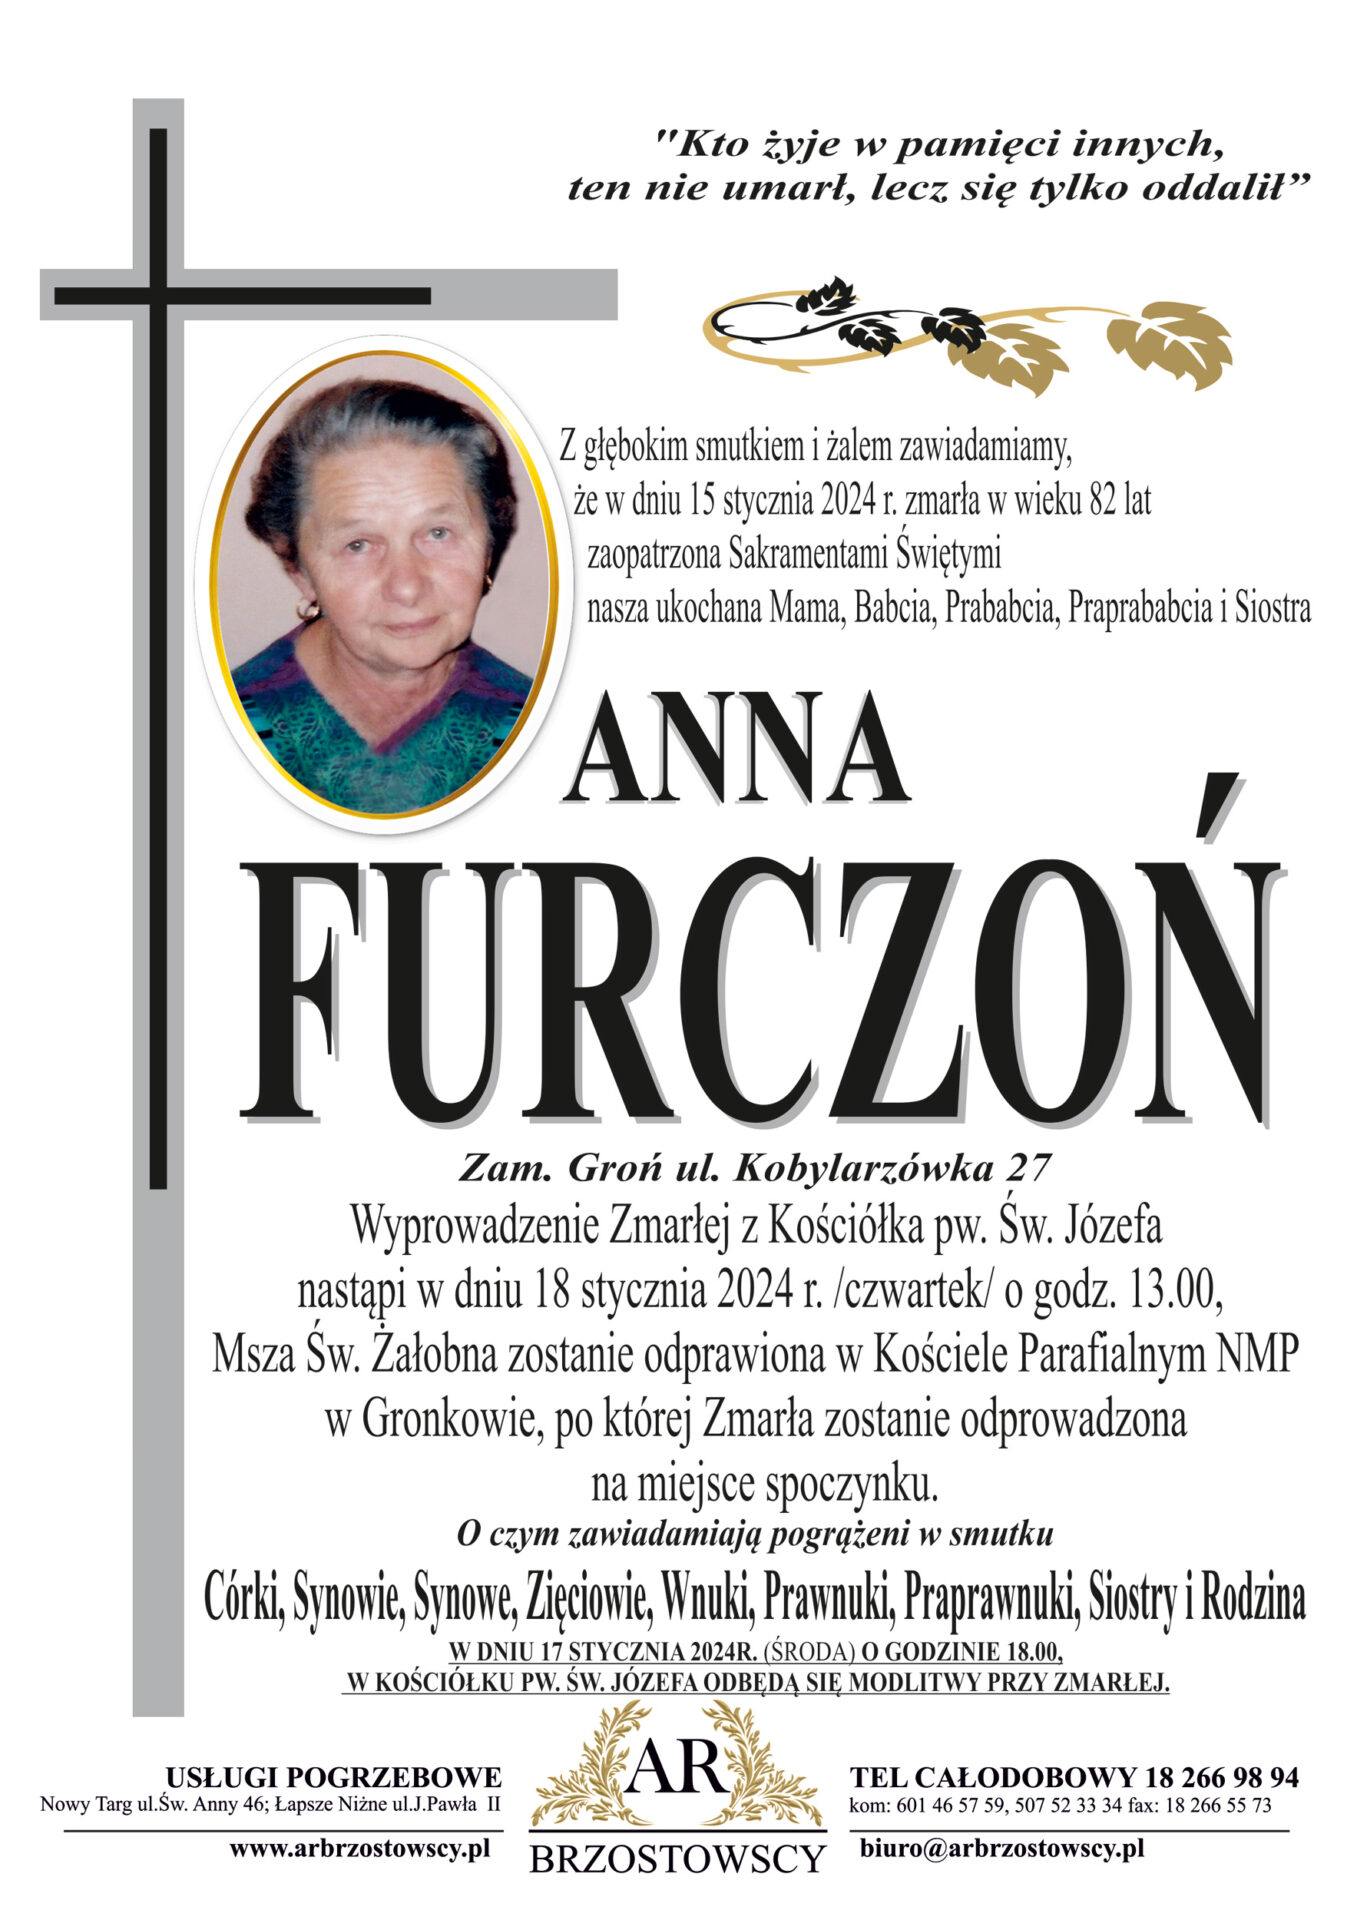 Anna Furczoń